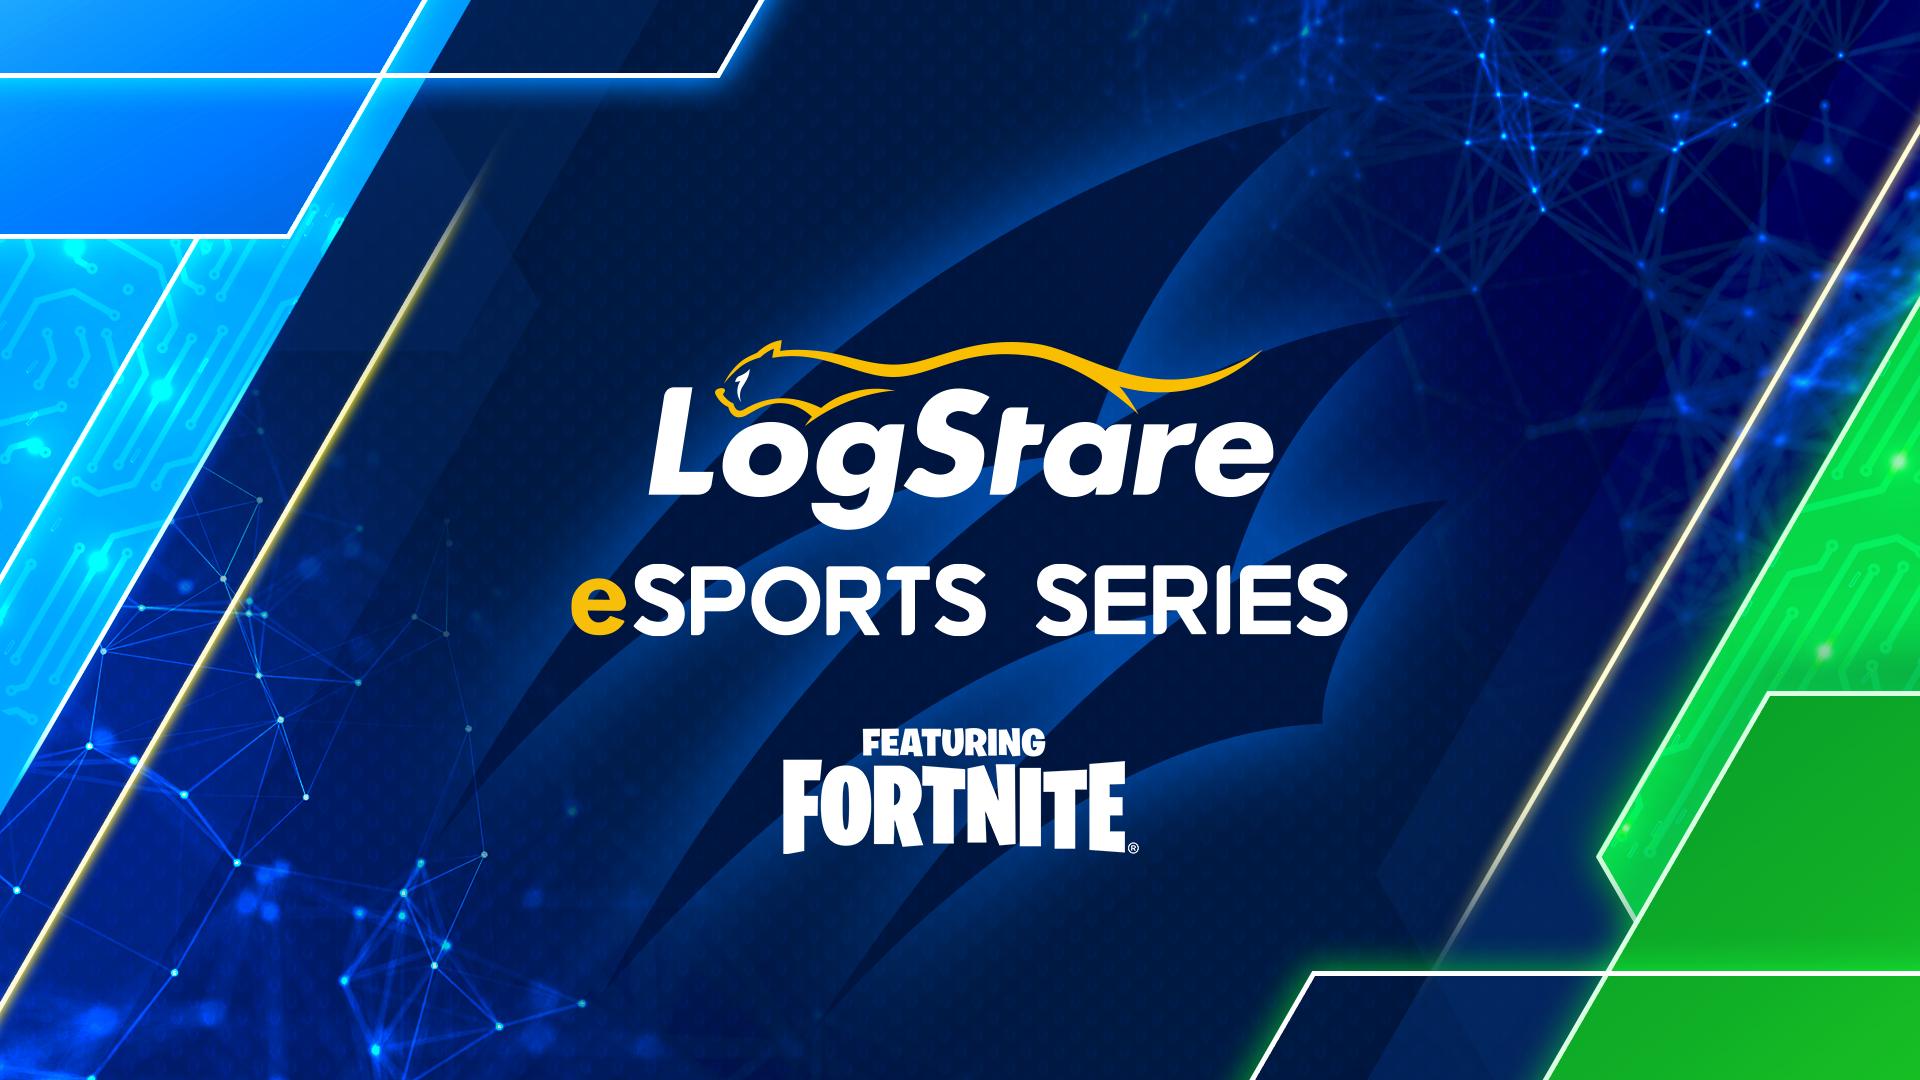 LogStare eSports Series featuring FORTNITE feature image